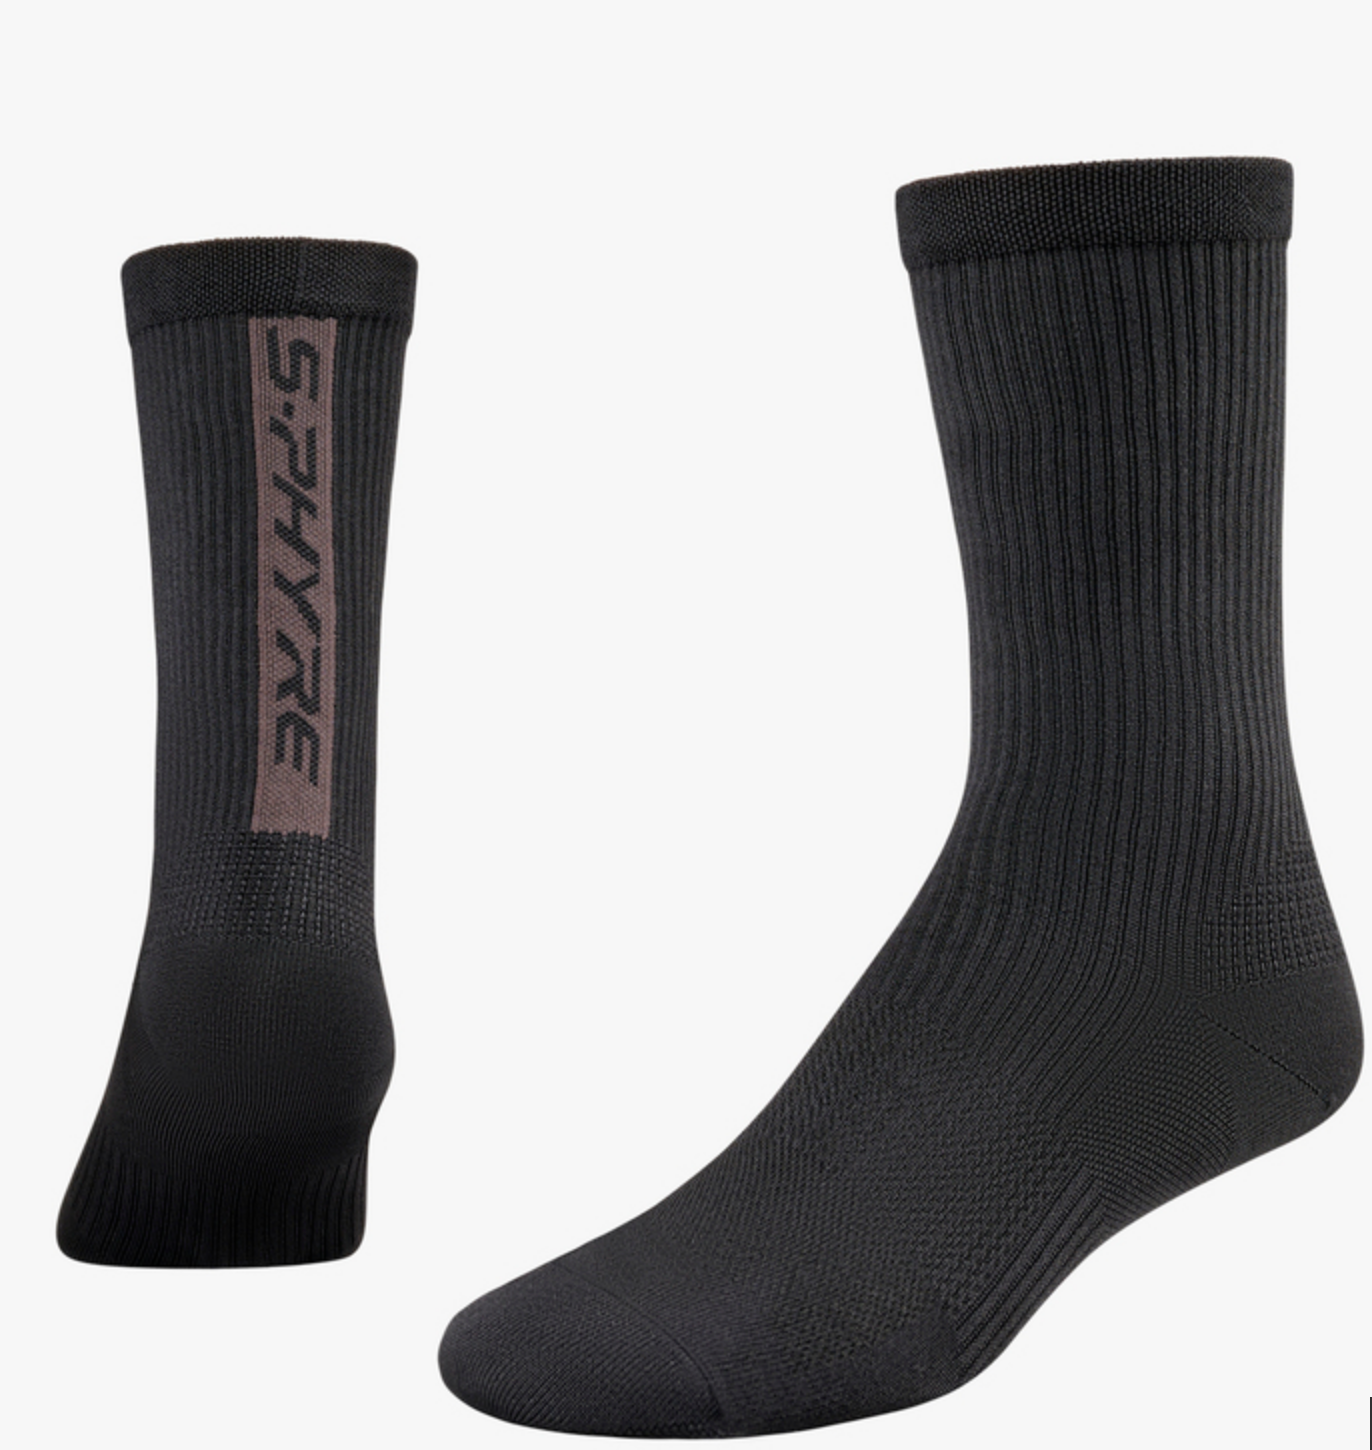 S-PHYRE Flash Socks